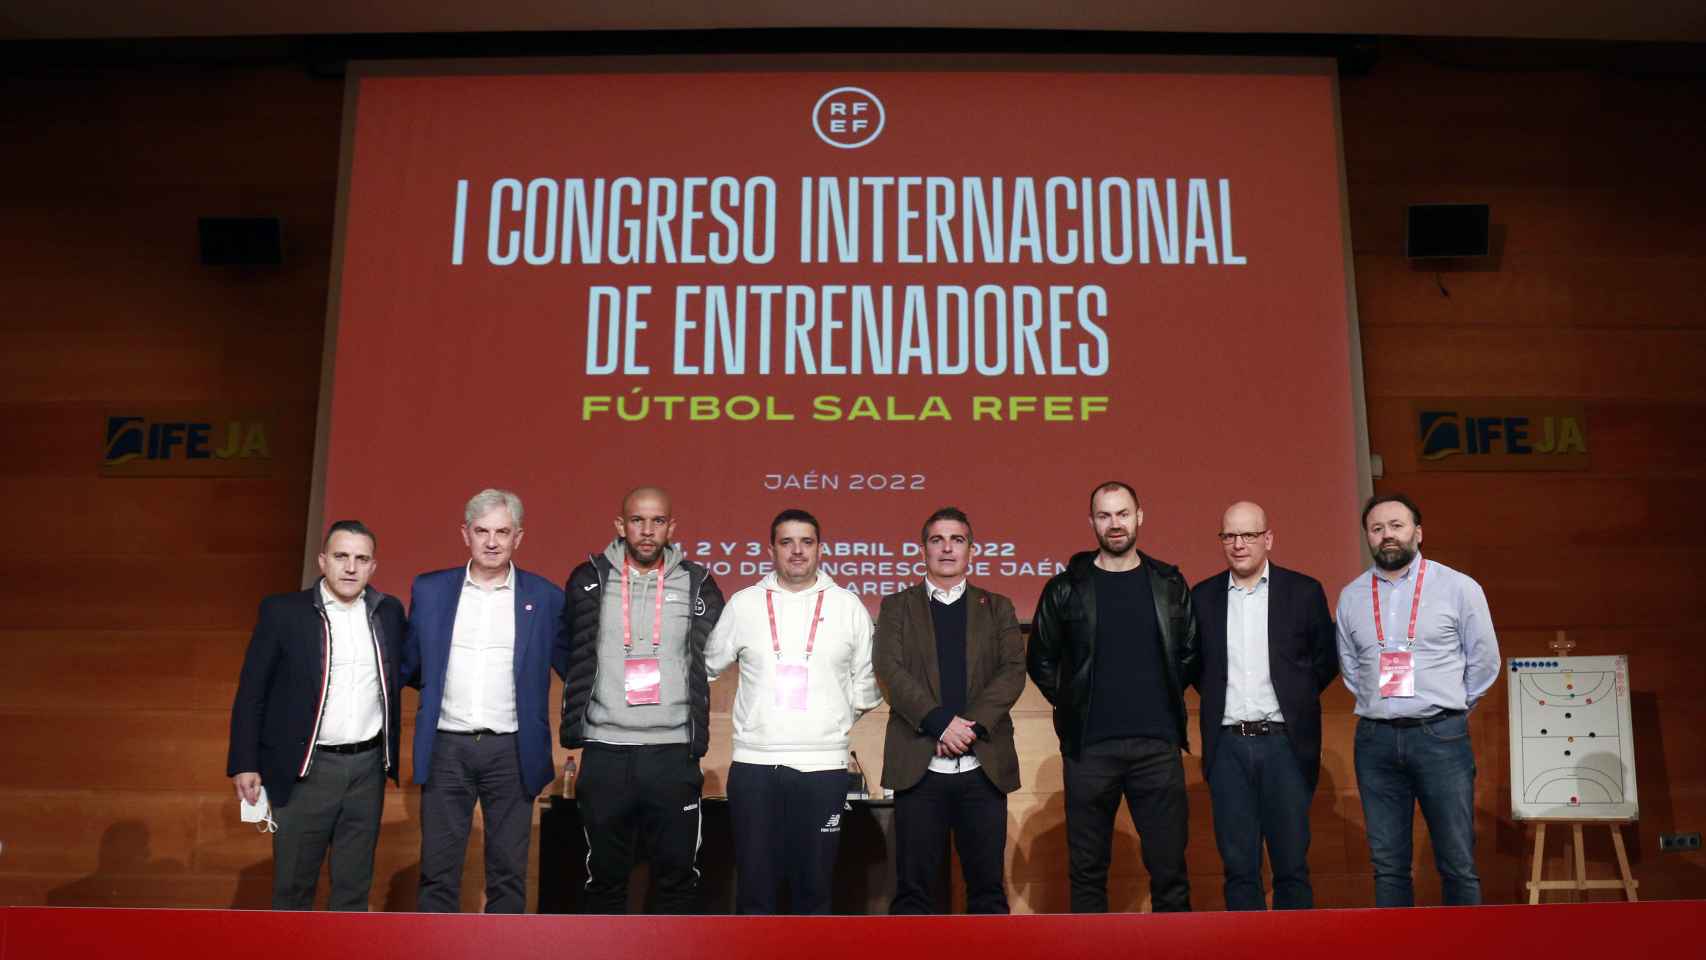 Congreso internacional de entrenadores de fútbol sala.